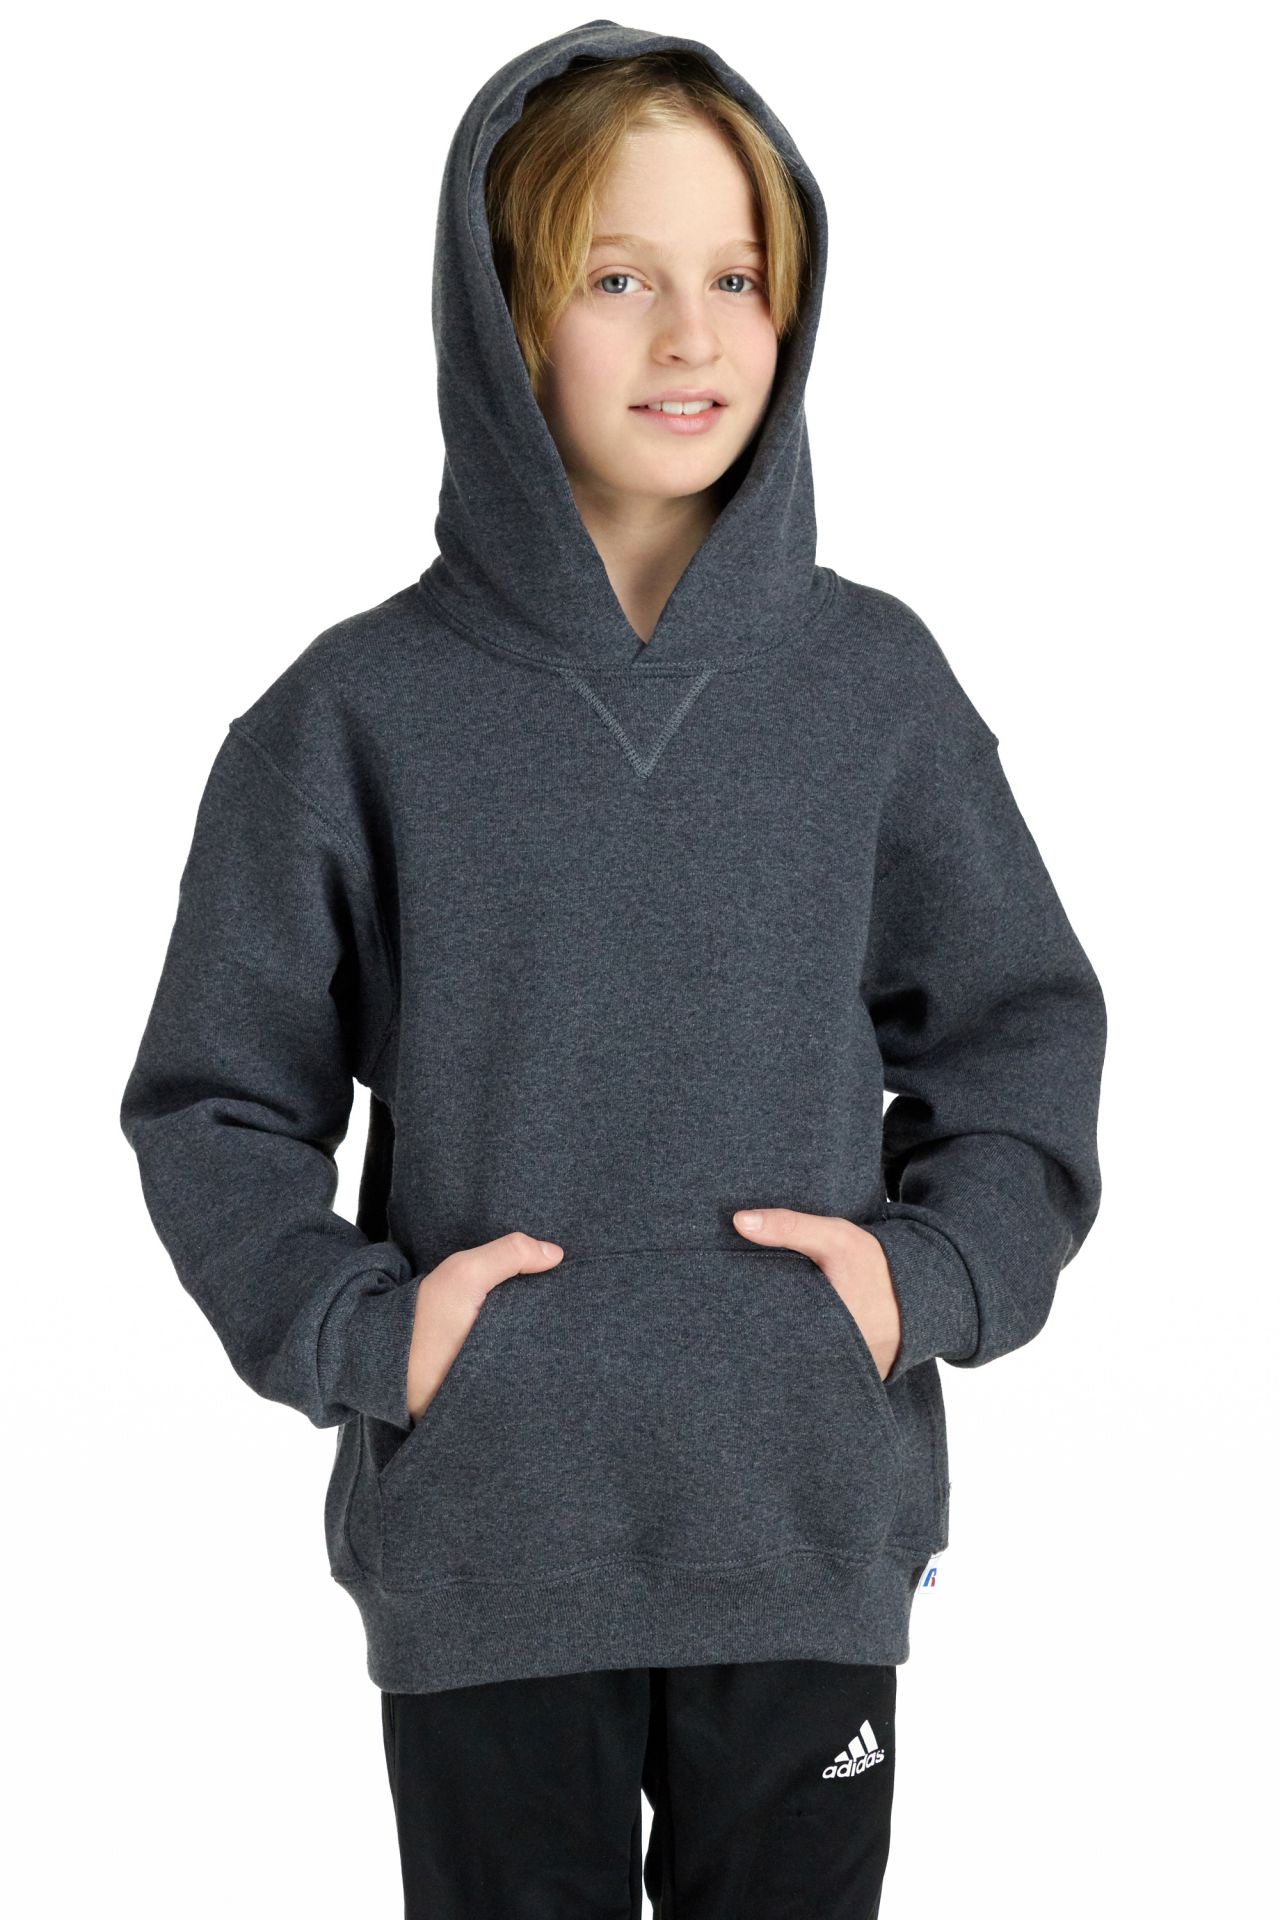 Youth Dri-Power Fleece Pullover Hoodie